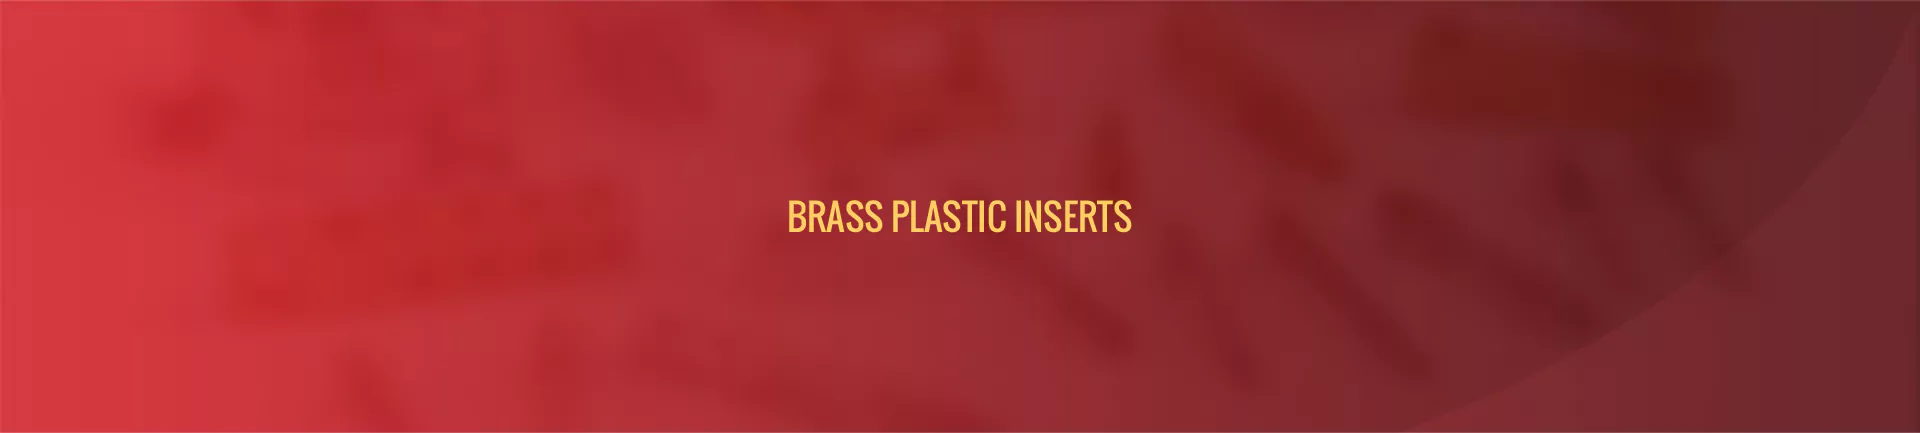 brass-plastic-inserts-banner